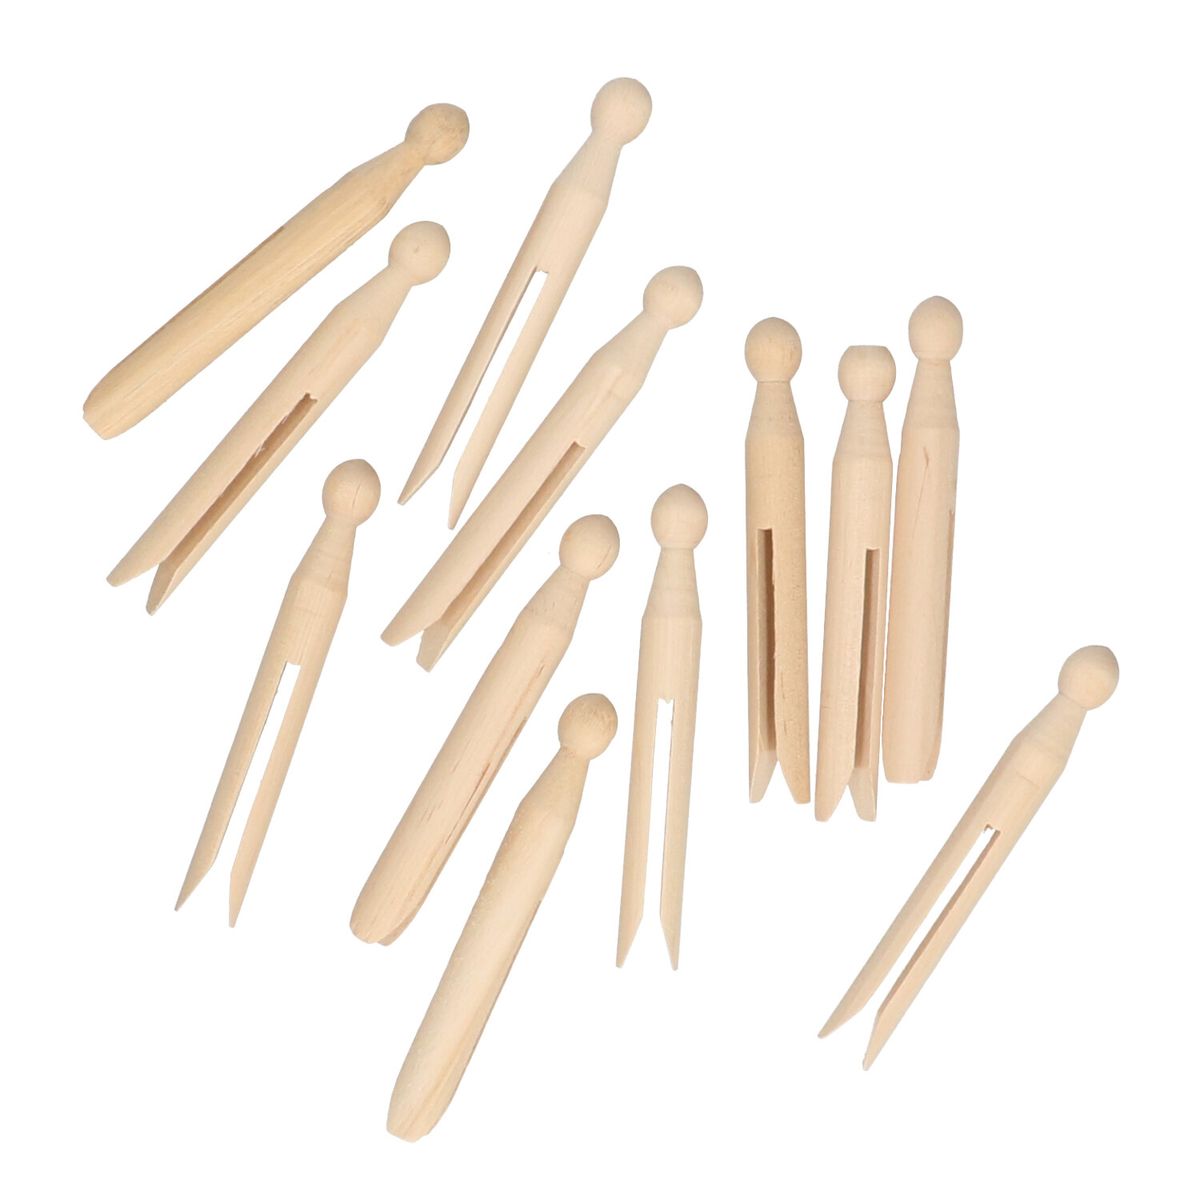 100 Mini Clothespins - 1 1/8 Wooden Clips - Mixed Colors - Craft